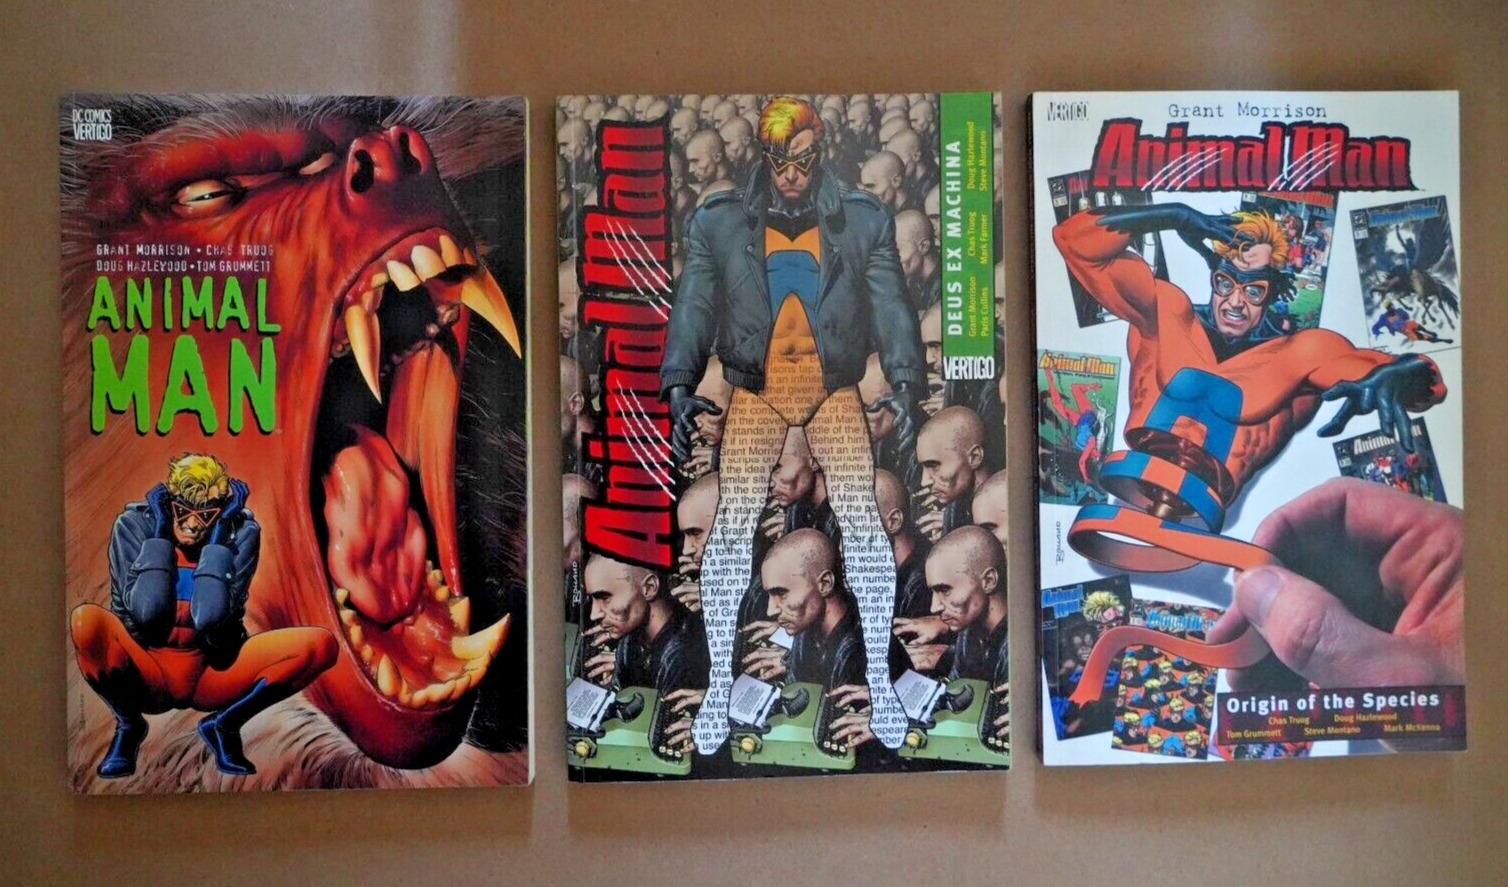 ANIMAL MAN Vol. 1-3 - Complete Grant Morrison run - DC Vertigo - Paperback